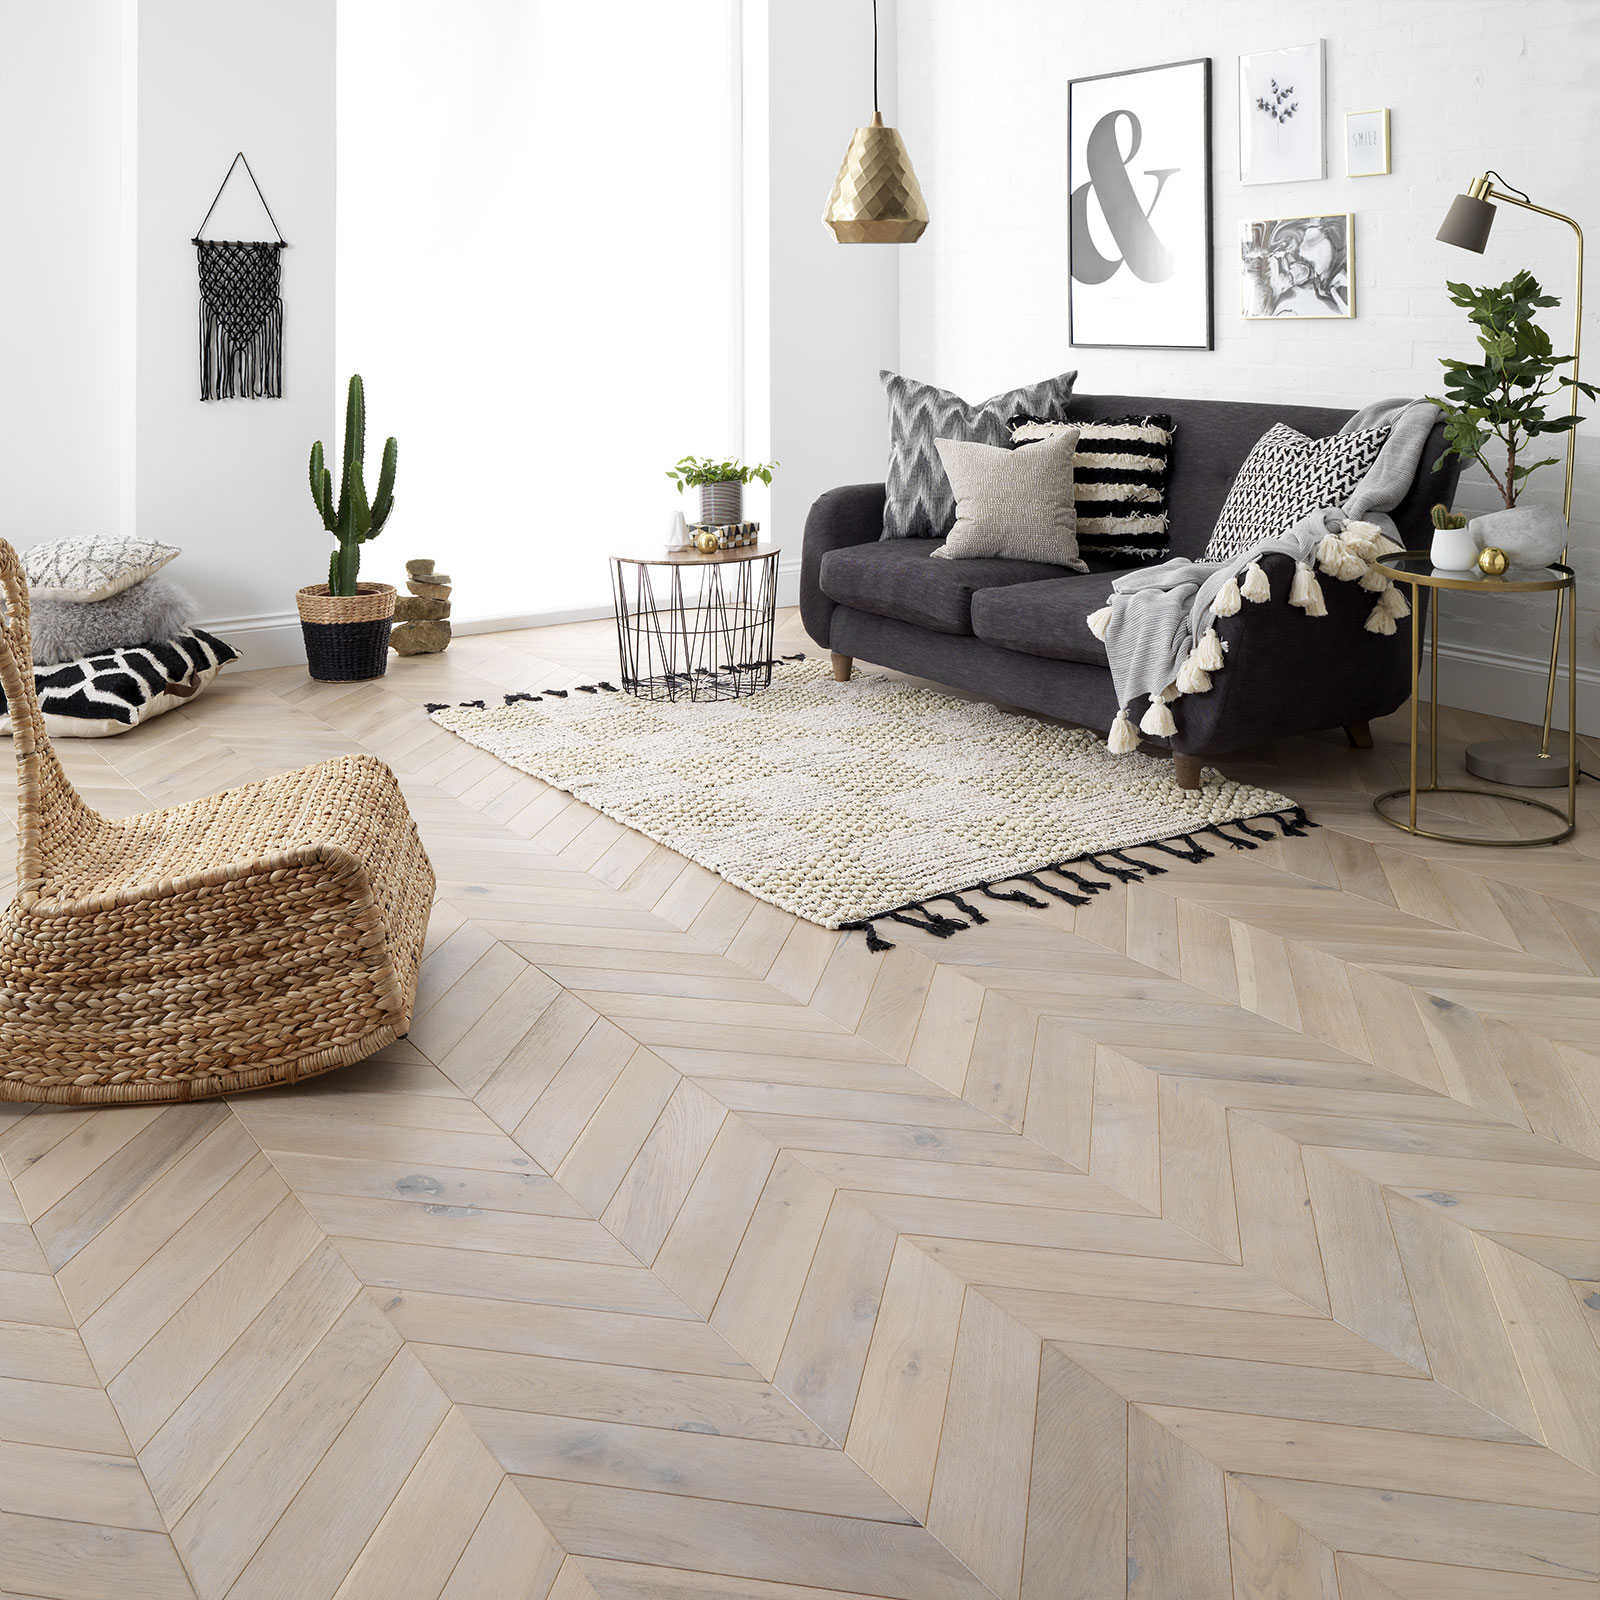 The Greige Wood Flooring Trend, Grey Hardwood Floors Latest Trend